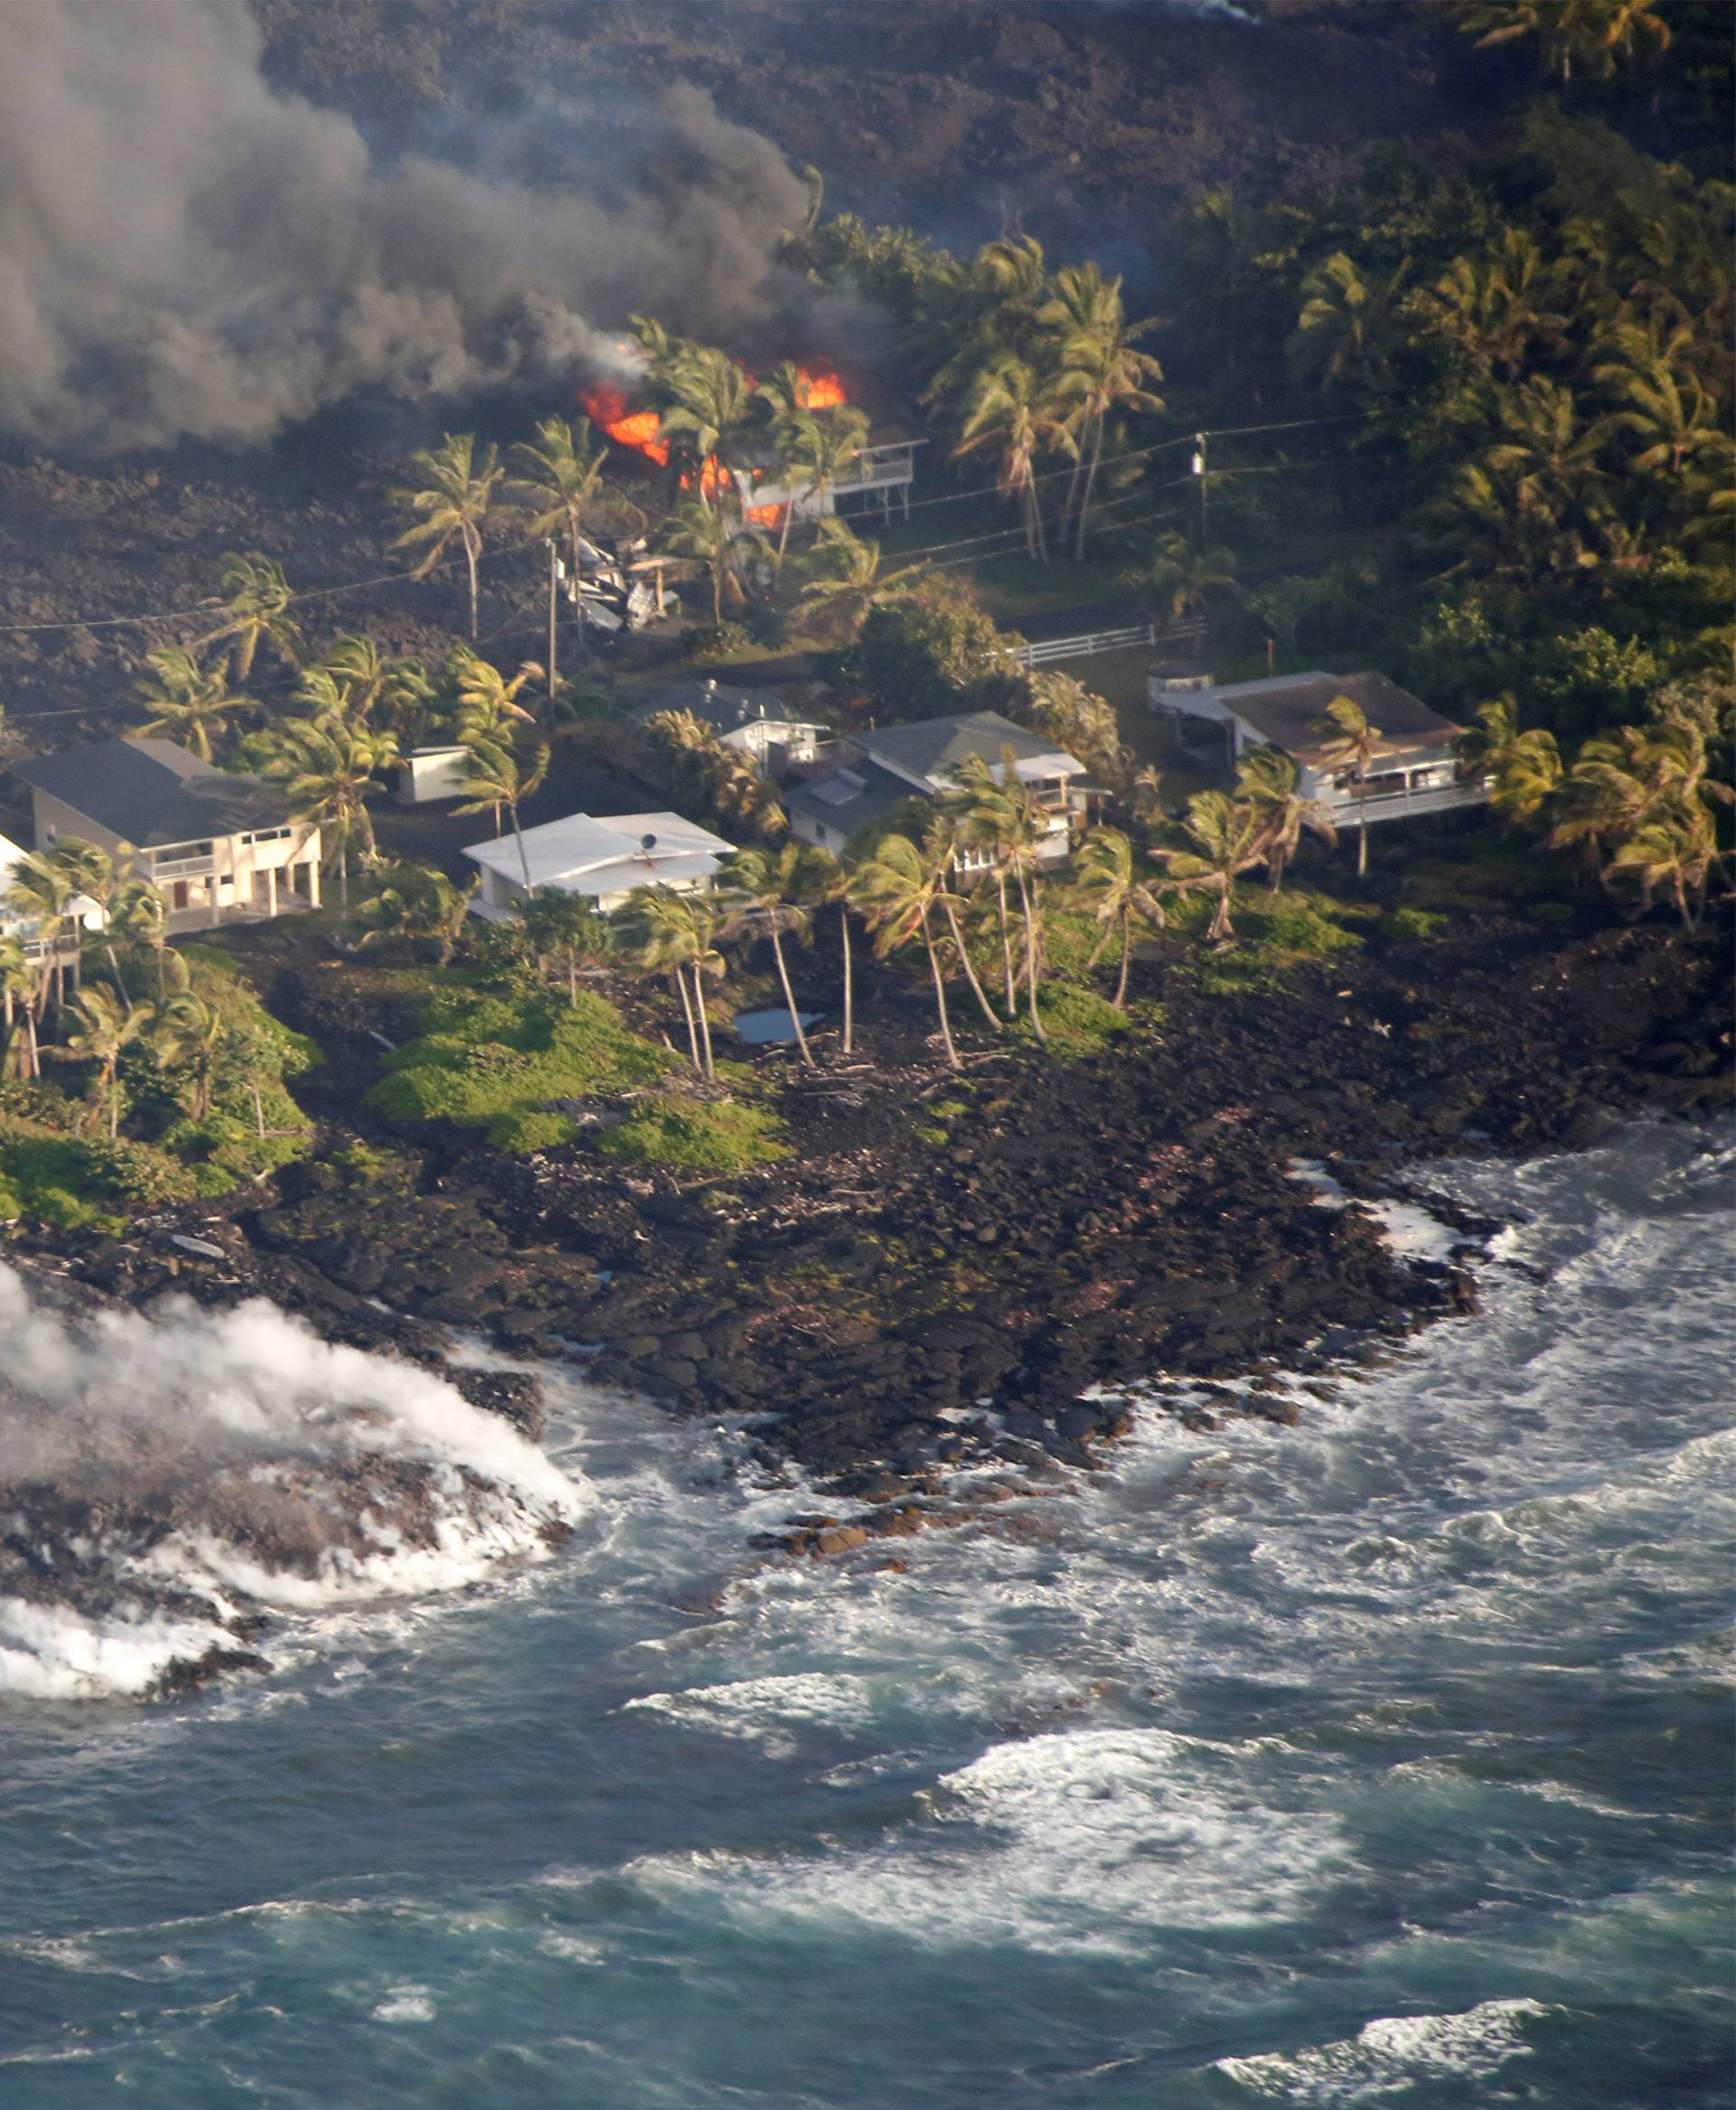 Lava destroys homes in the Kapoho area, east of Pahoa